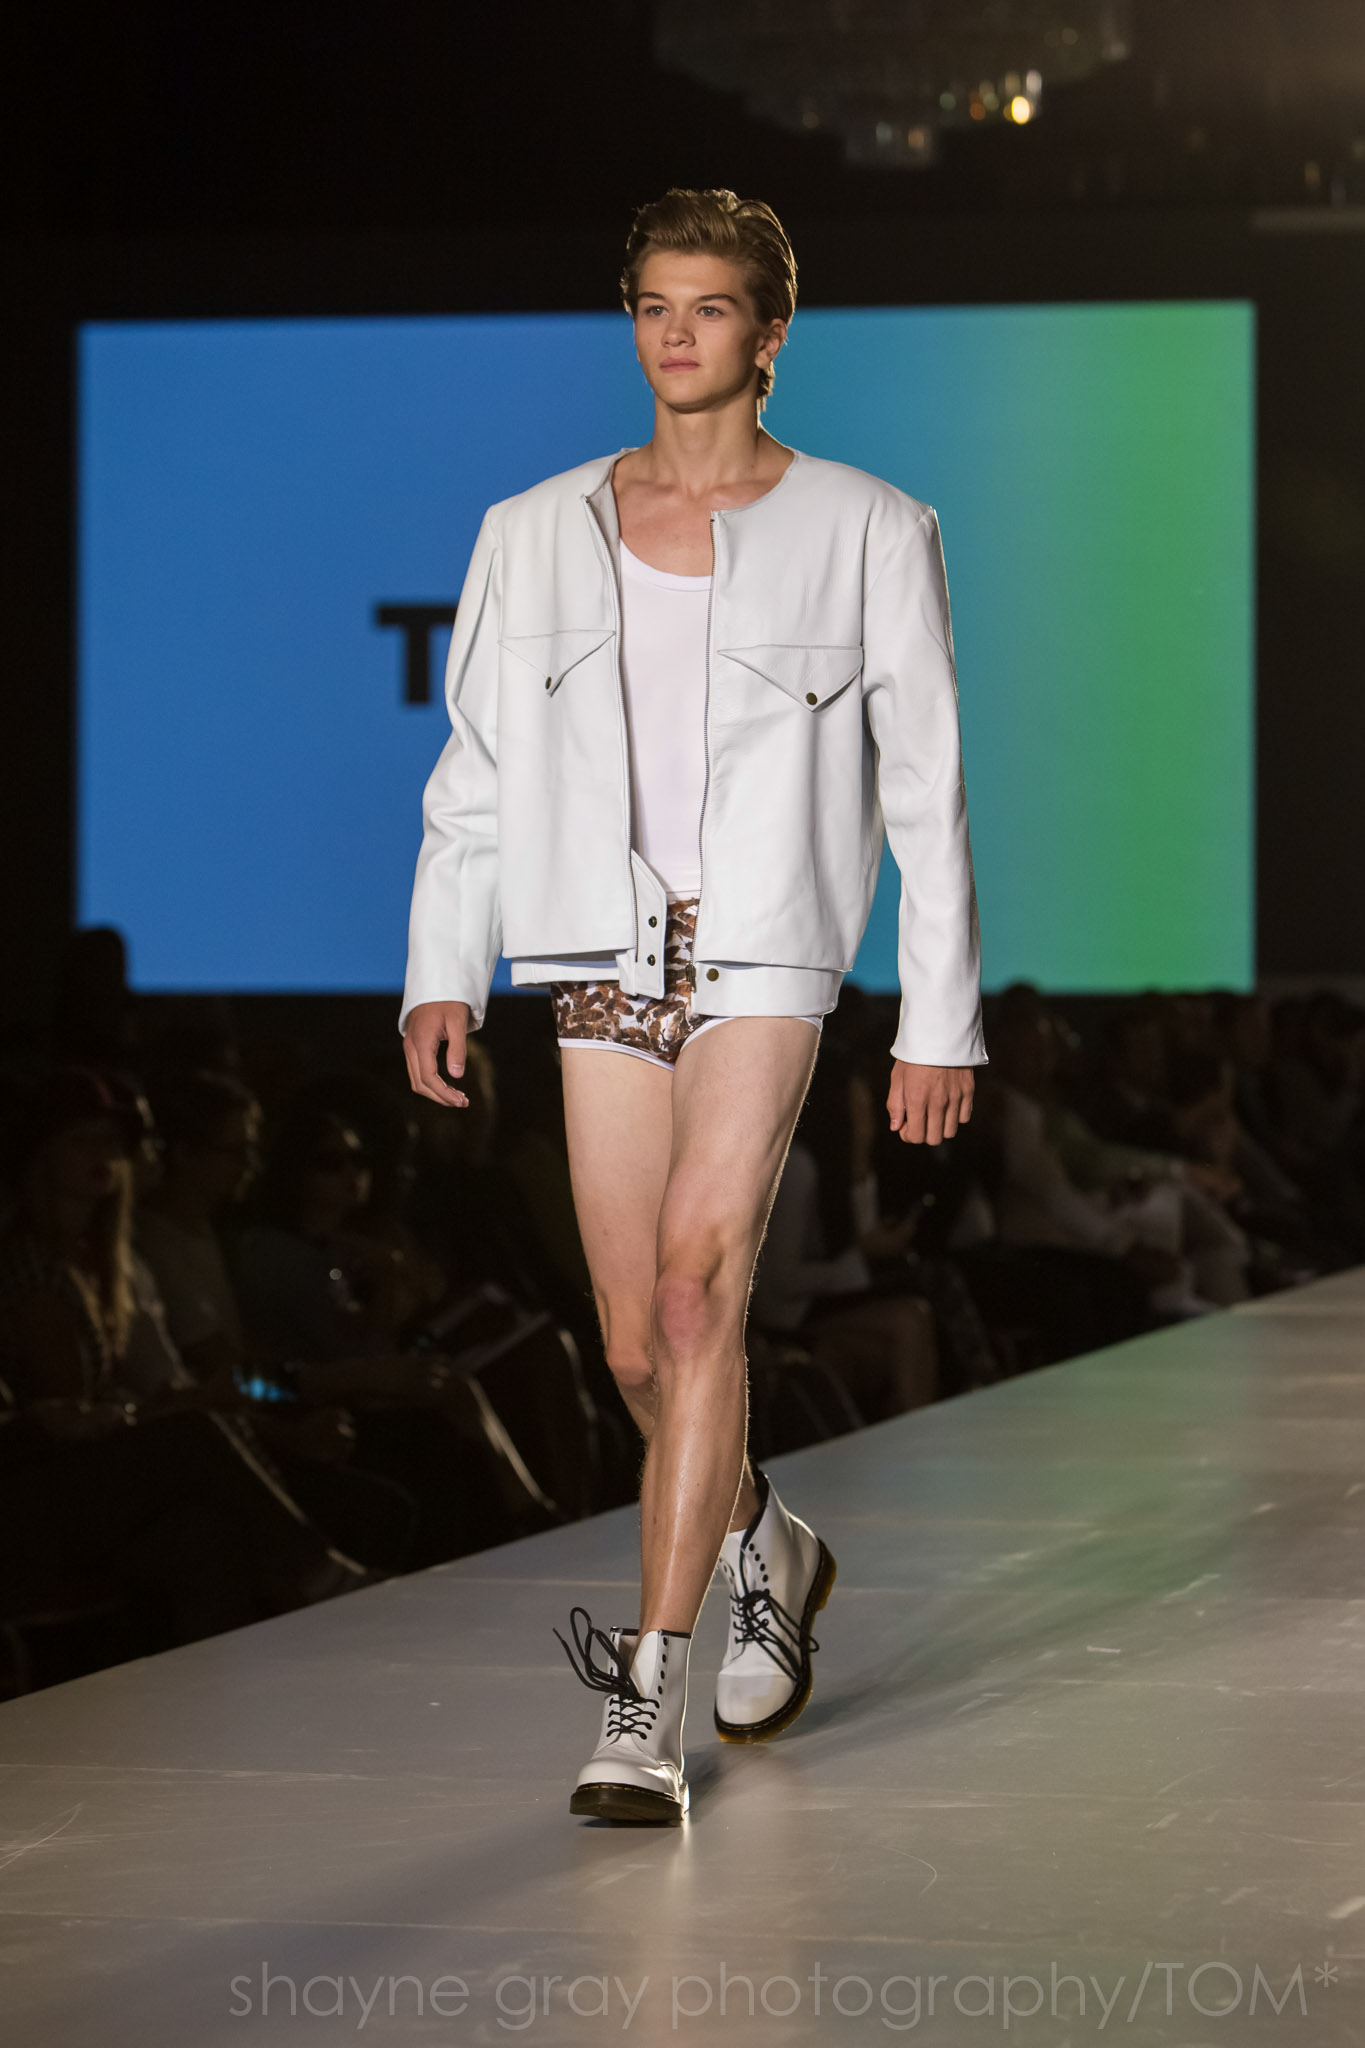 Shayne-Gray-Toronto-men's-fashion_week-TOM-worth-by-david-c-wigley-6246.jpg